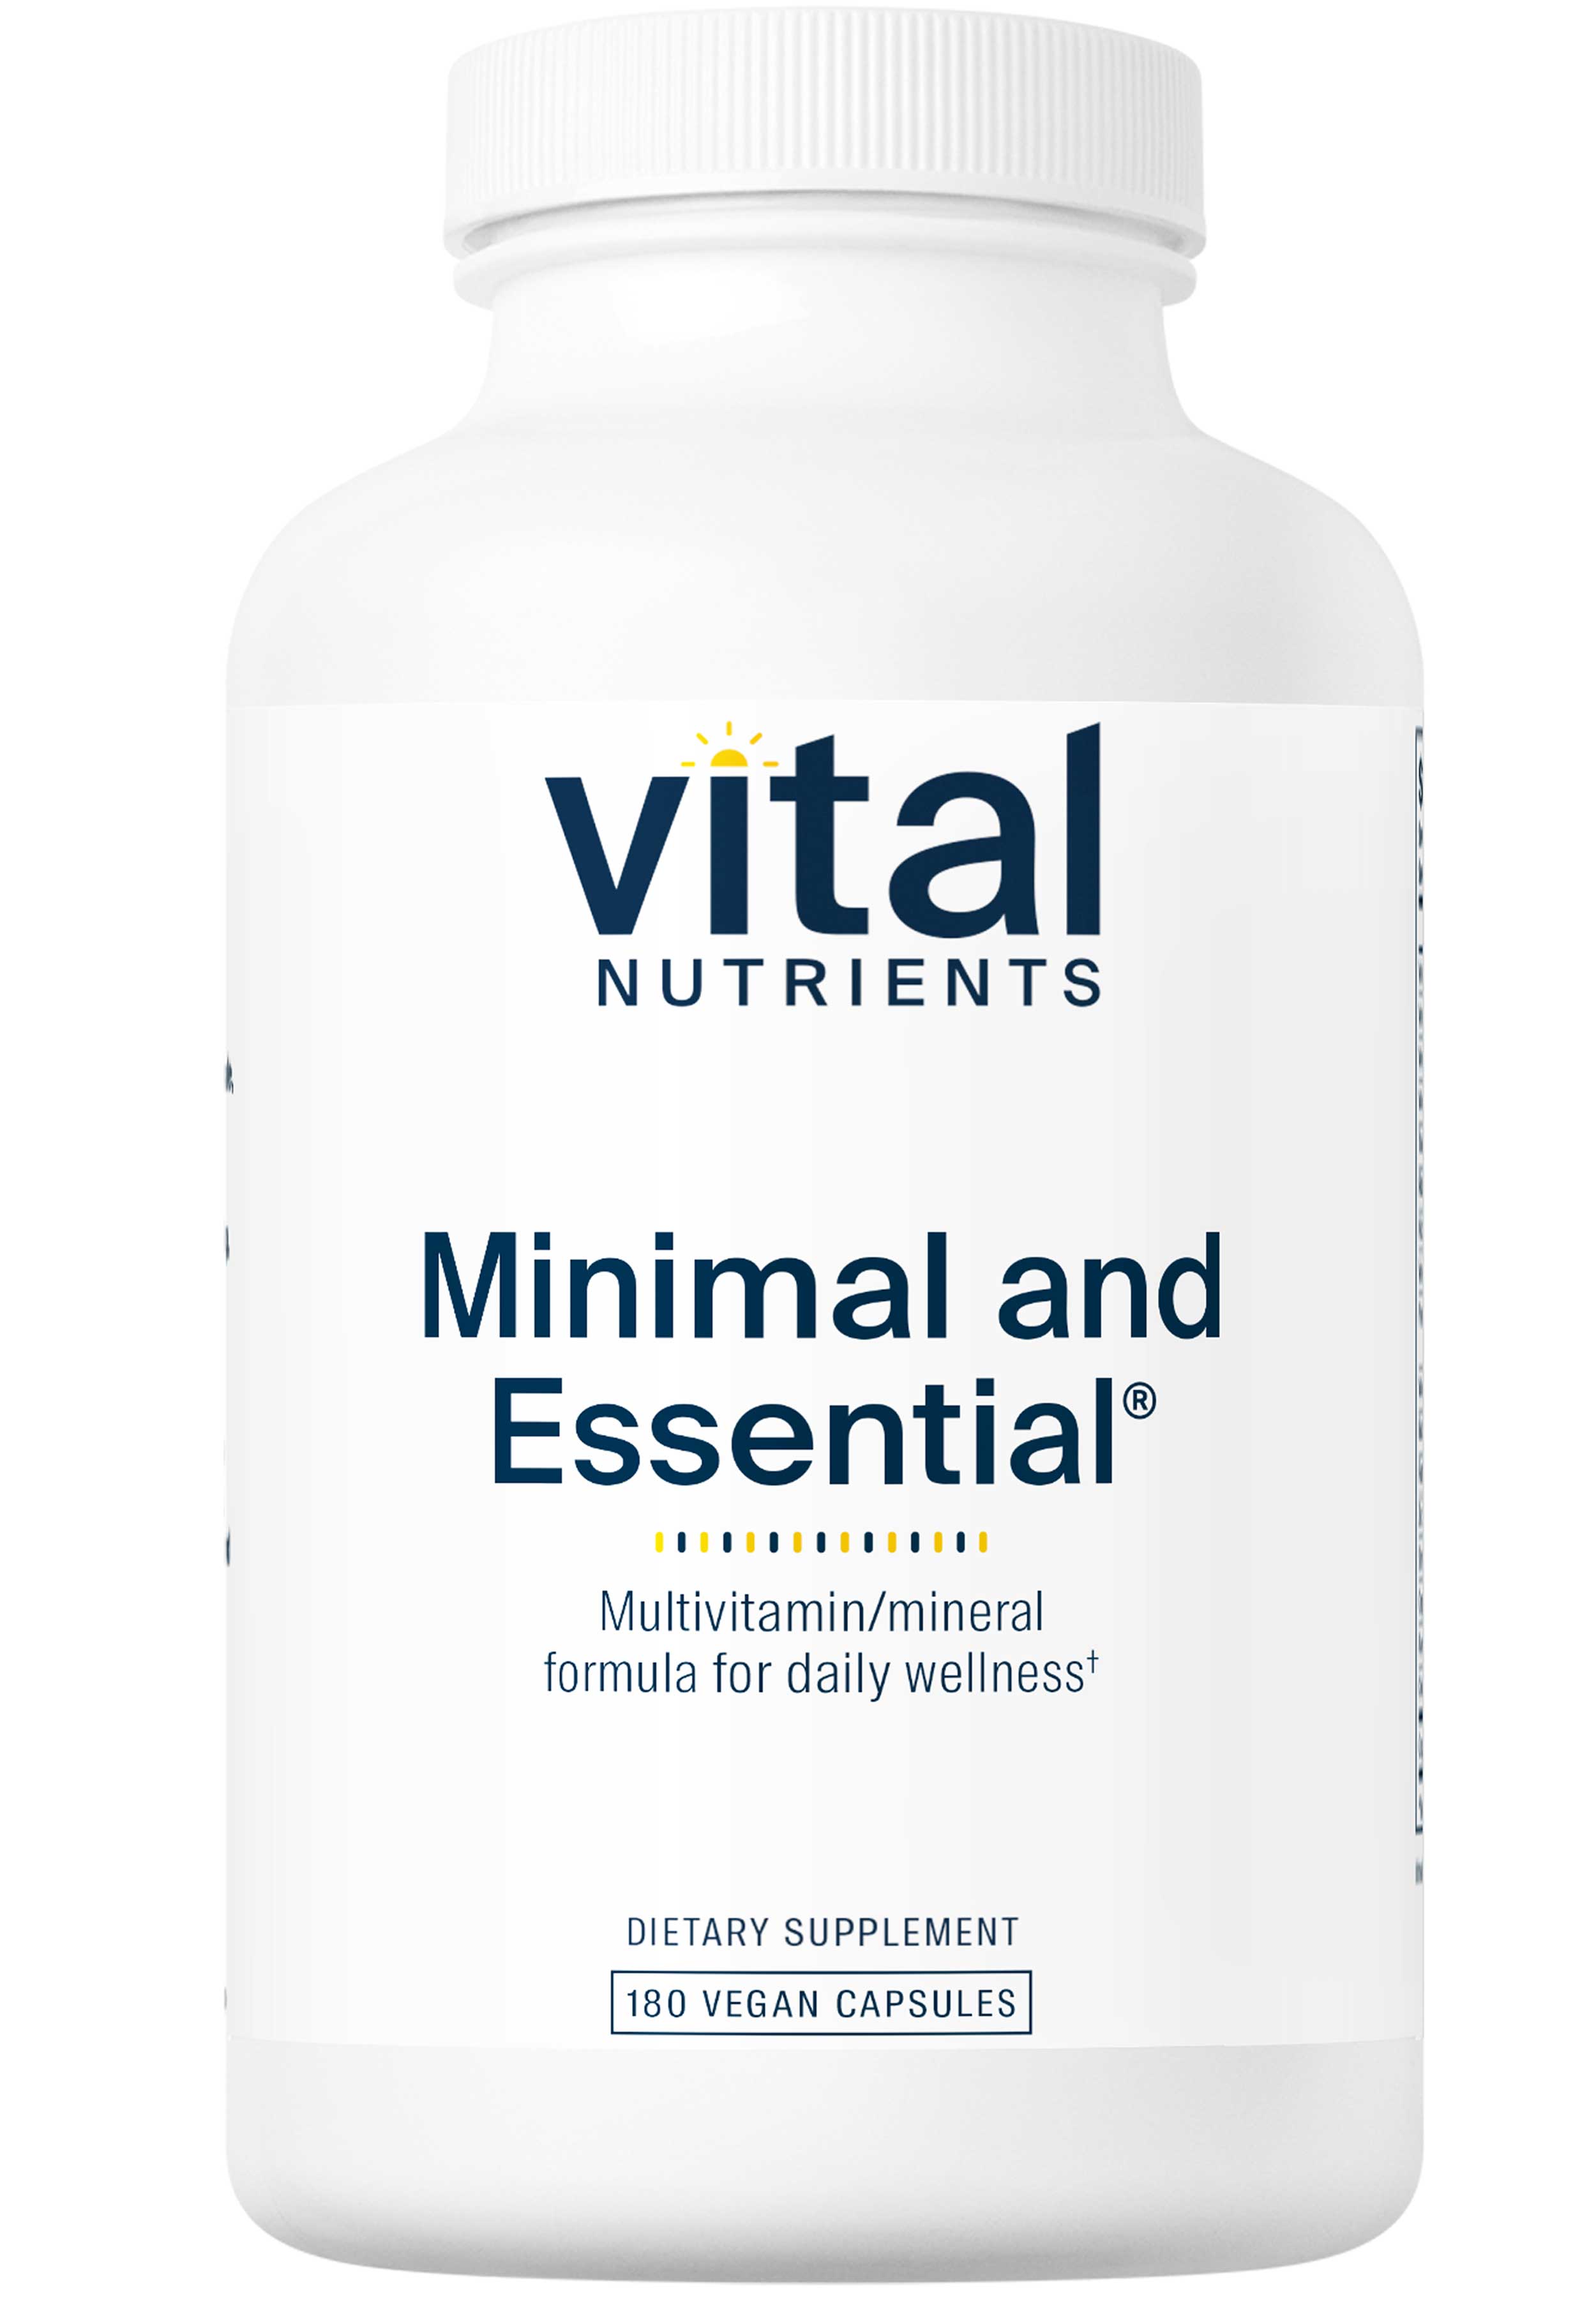 Vital Nutrients Minimal and Essential